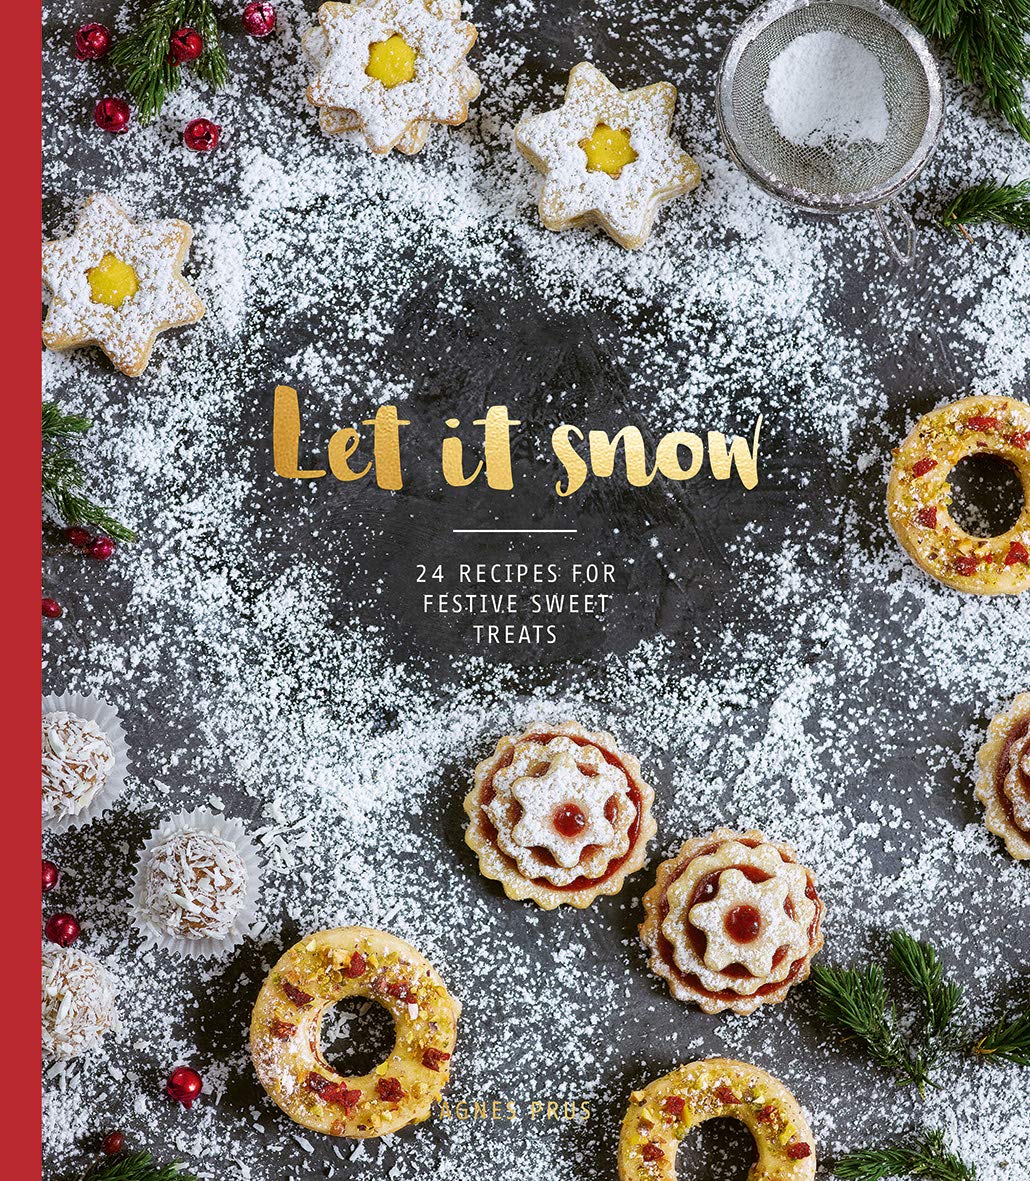 Let it Snow: 24 Recipes for Festive Sweet Treats (Agnes Prus)